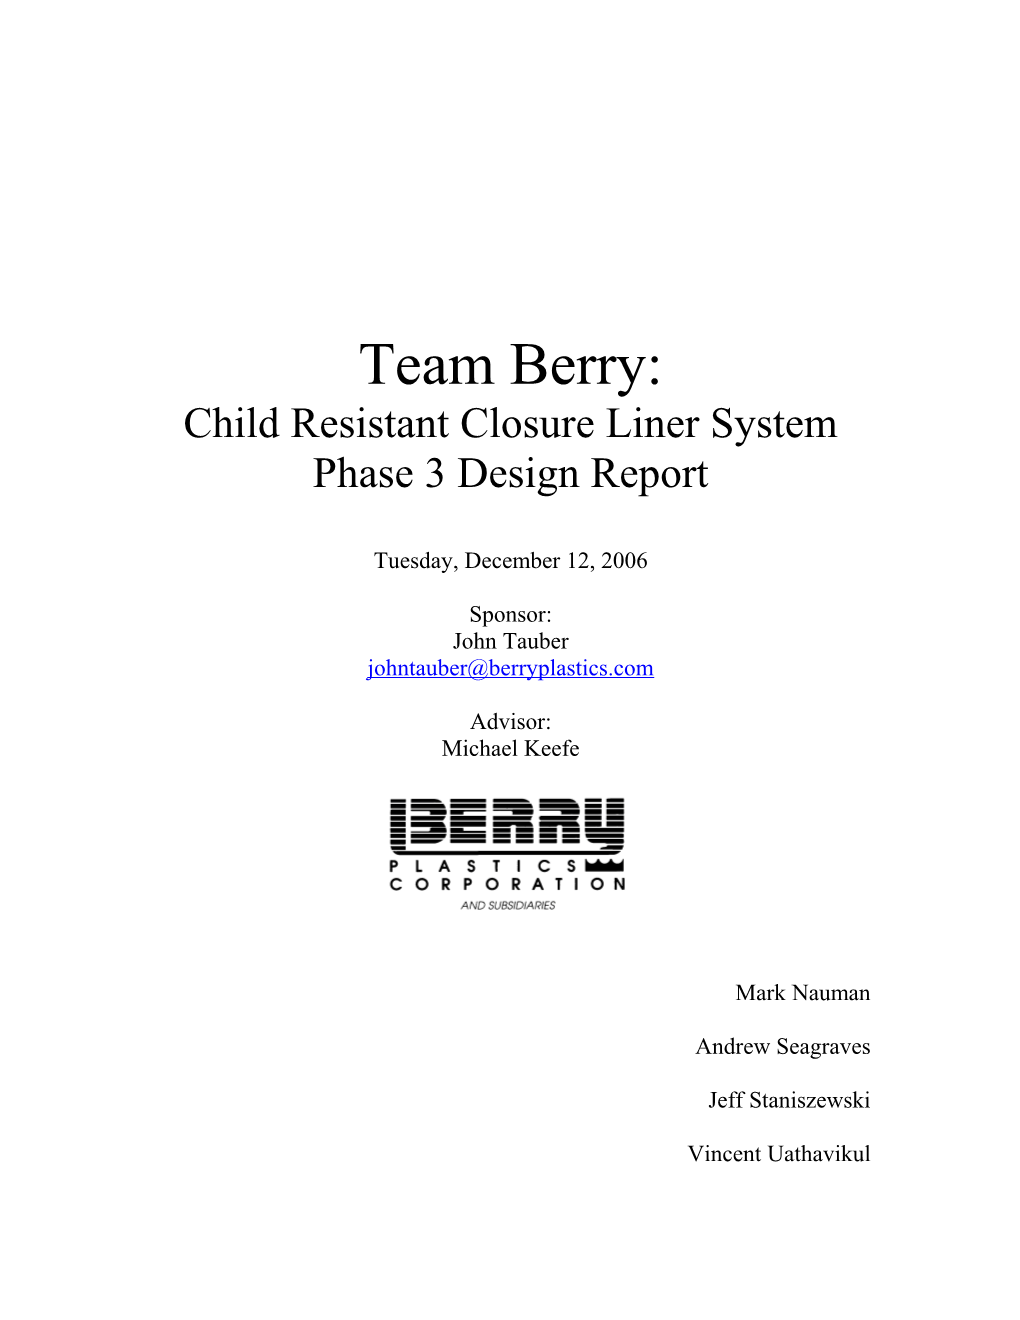 Child Resistant Closure Liner System Phase 3 Design Report